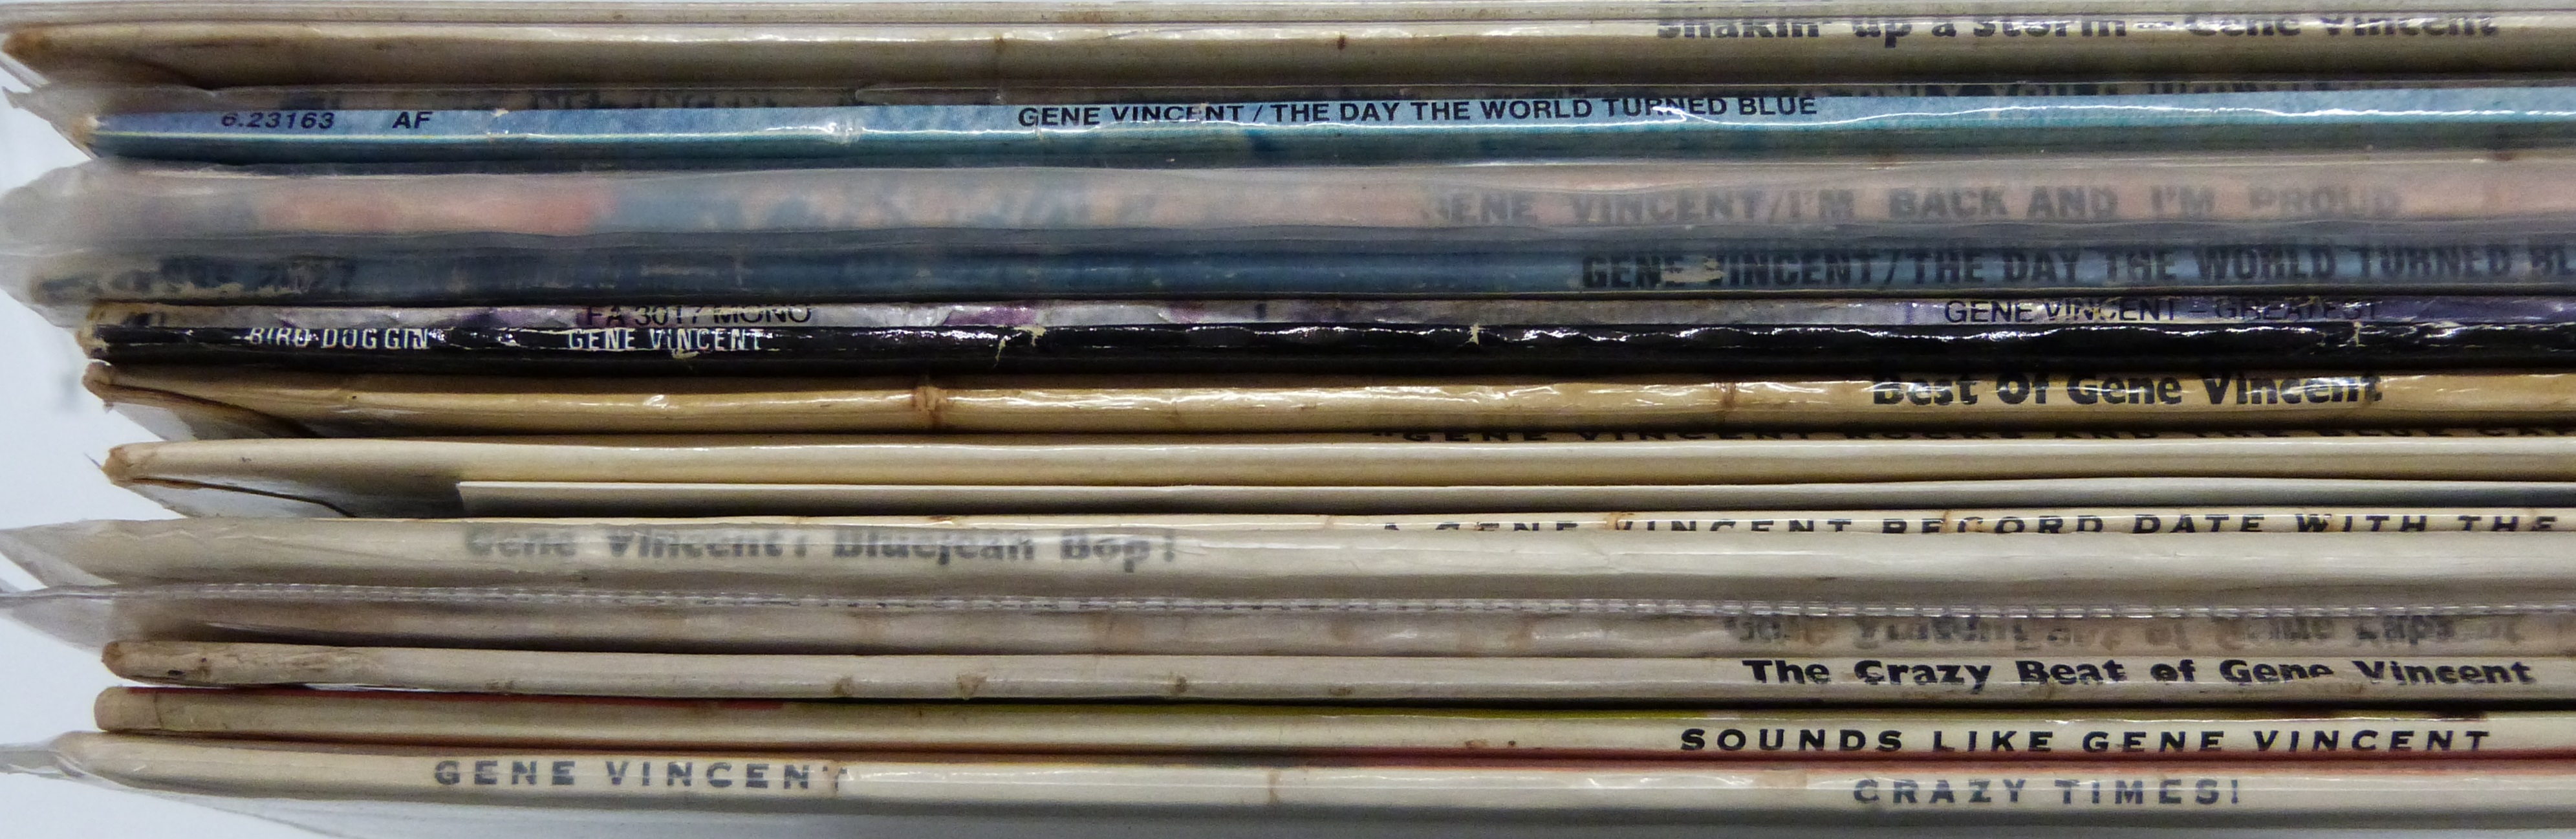 Gene Vincent - sixteen albums including Blue Jean Bop, Blue Caps, Blue Caps Roll, Record Date, - Image 3 of 3